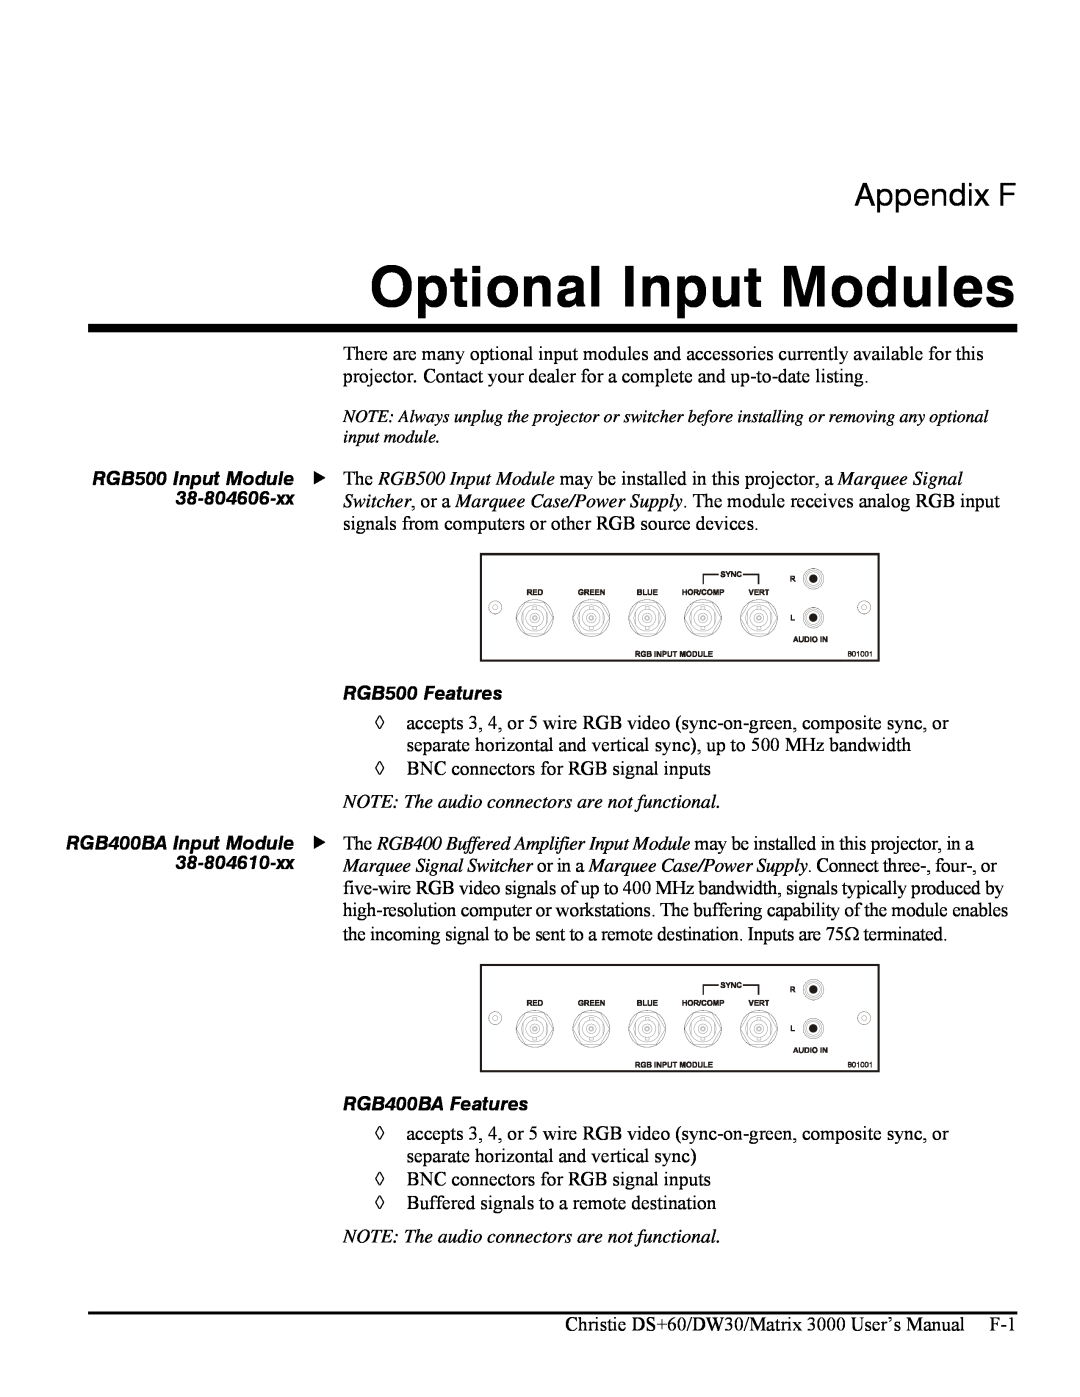 Texas Instruments MATRIX 3000, DW30 Optional Input Modules, Appendix F, RGB500 Input Module, 38-804606-xx, RGB500 Features 